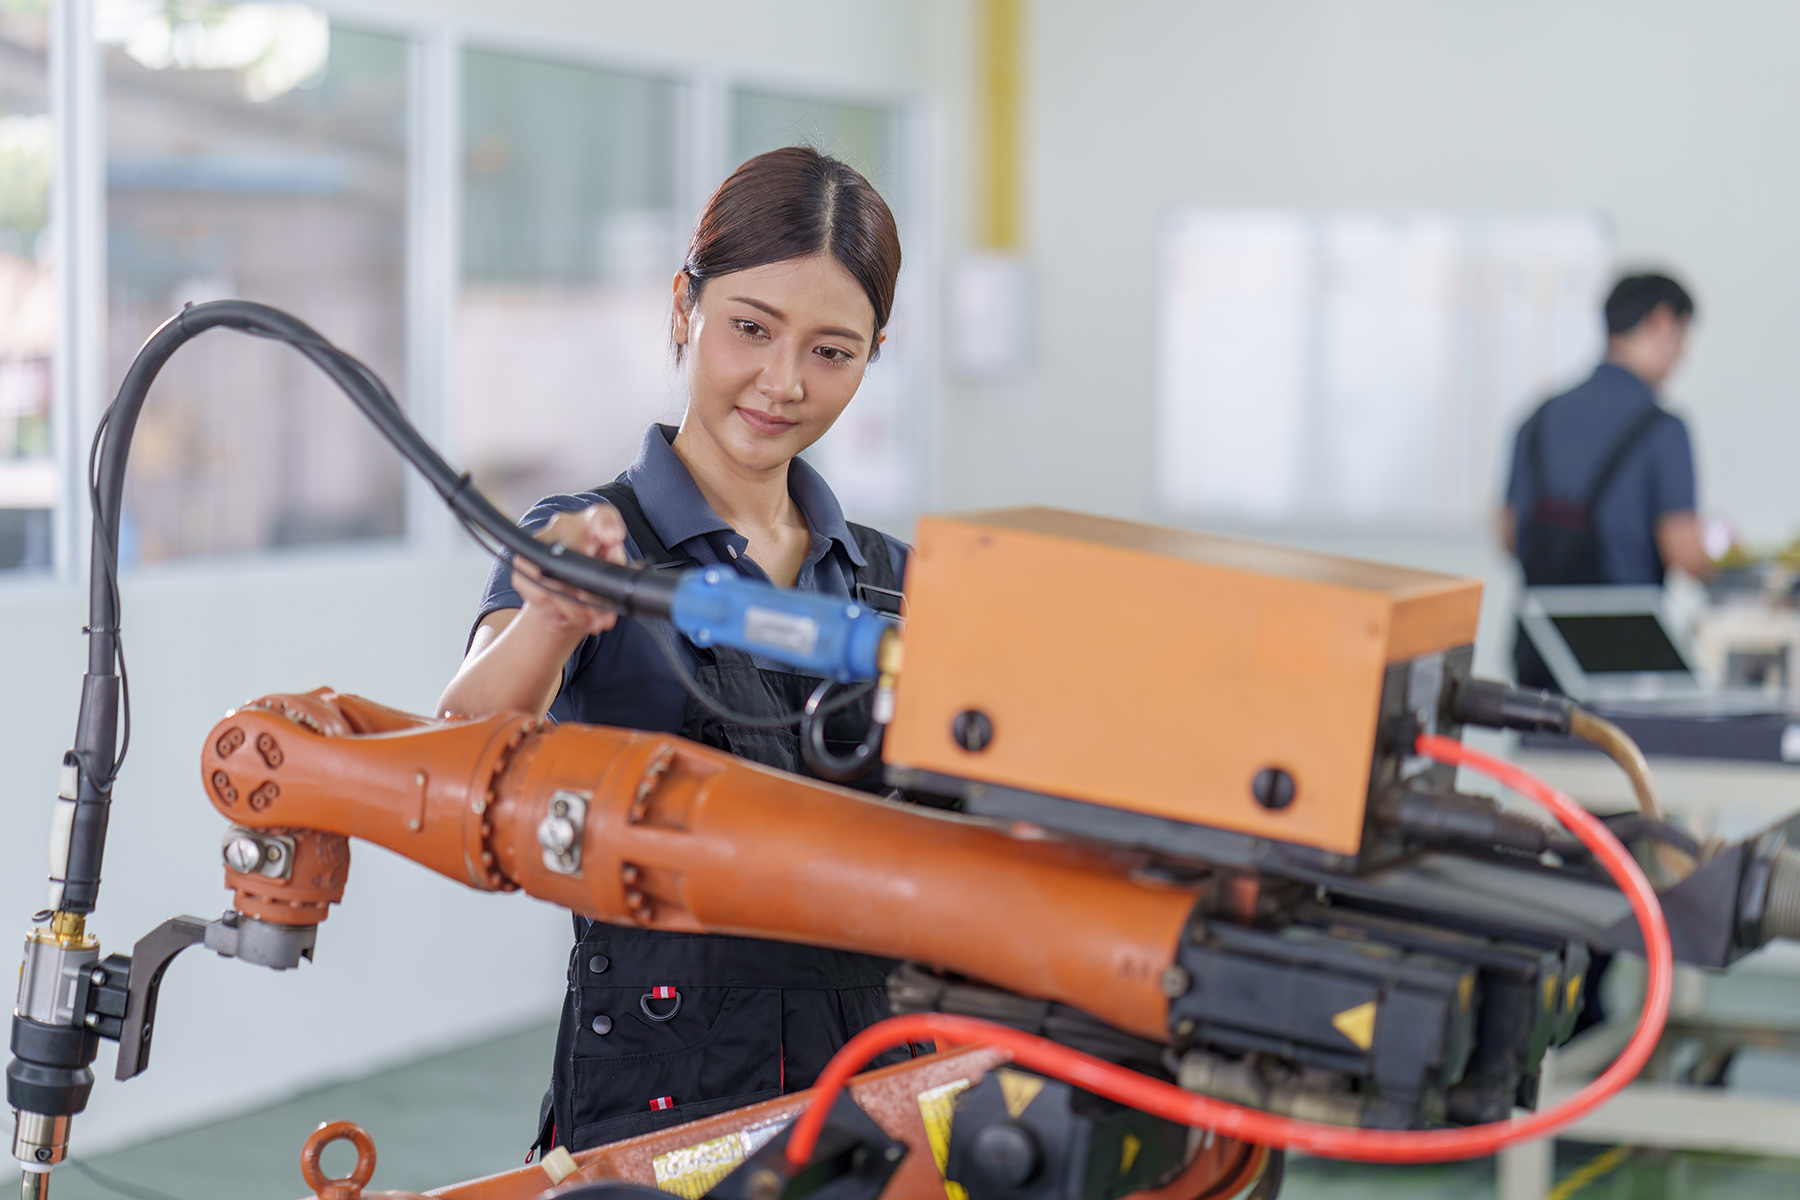 An engineer trainee/student works or trains on an orange robotics machine to gain practical skills